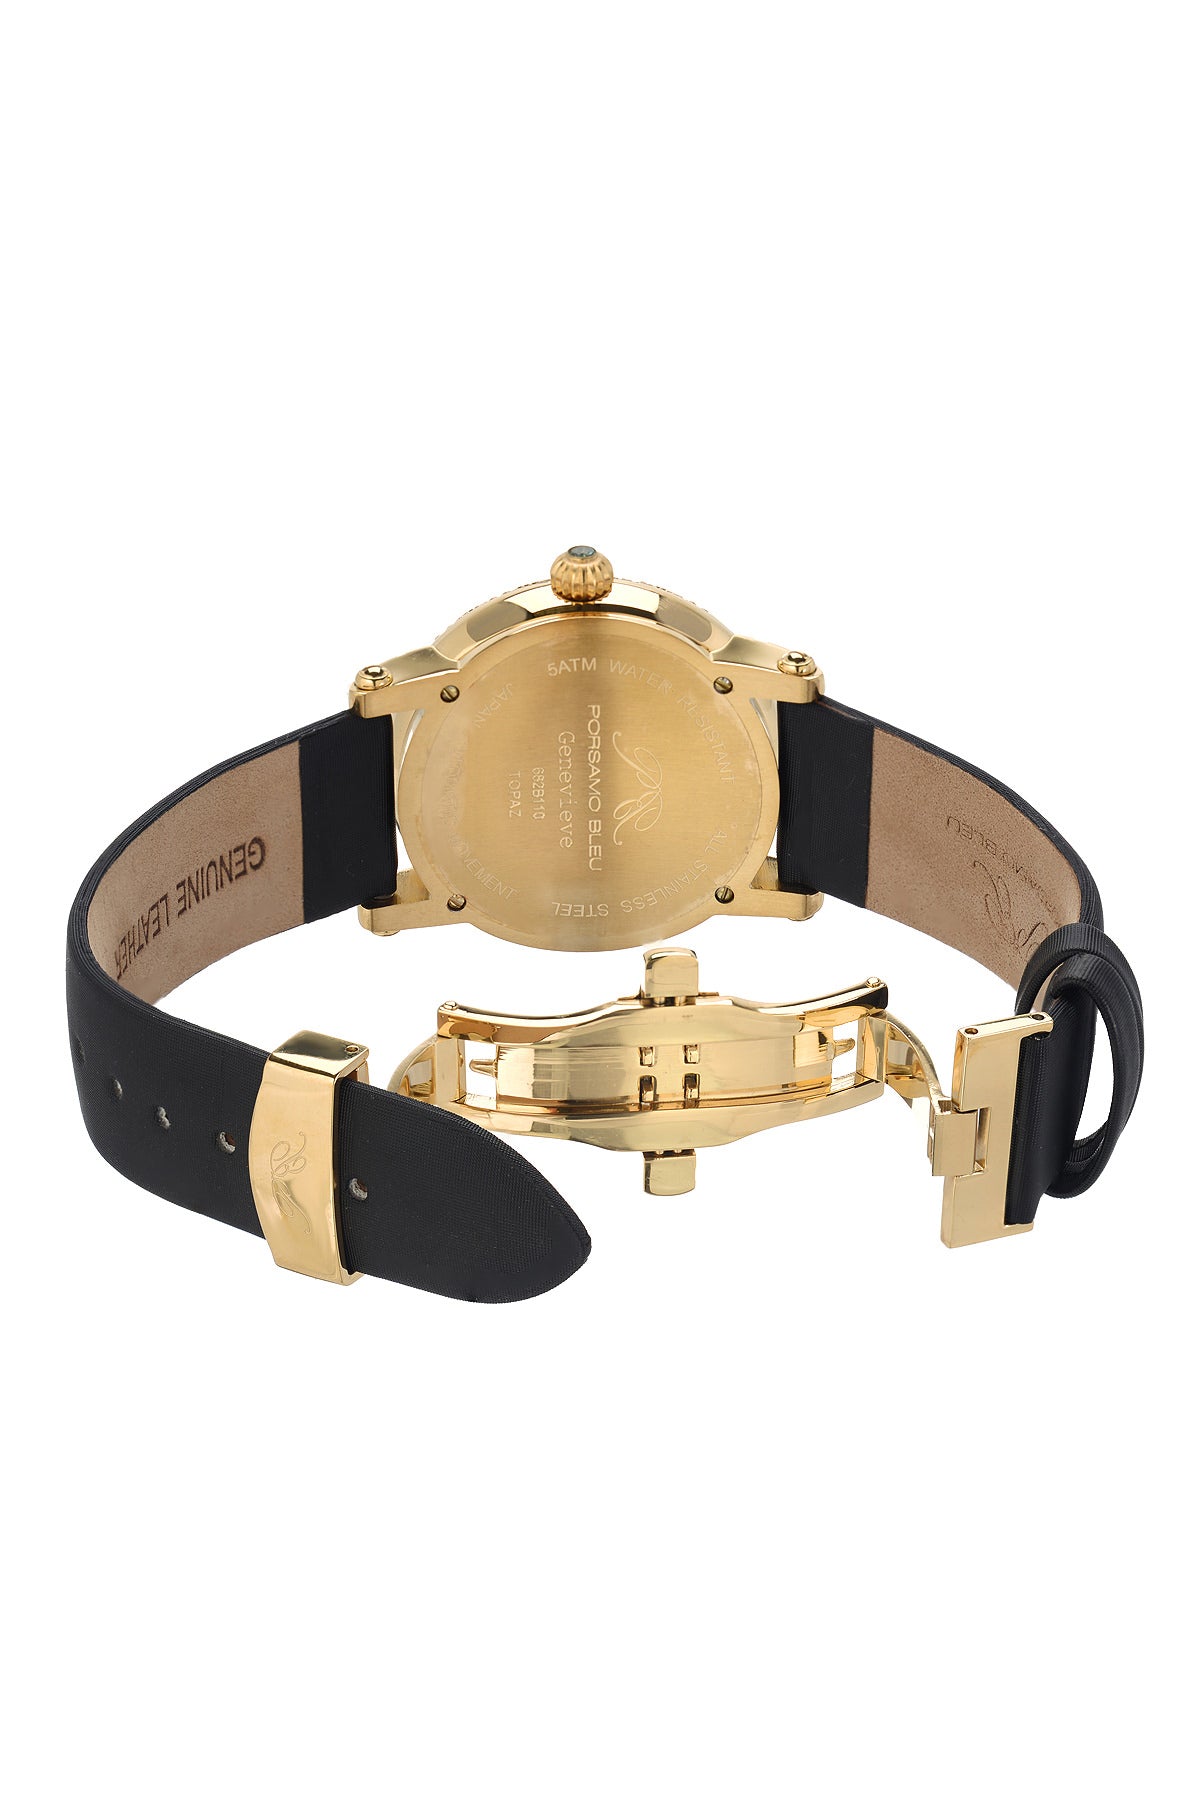 Porsamo Bleu Genevieve Luxury Topaz Women's Satin Leather Watch, Gold, Blue, Black 682BGEL